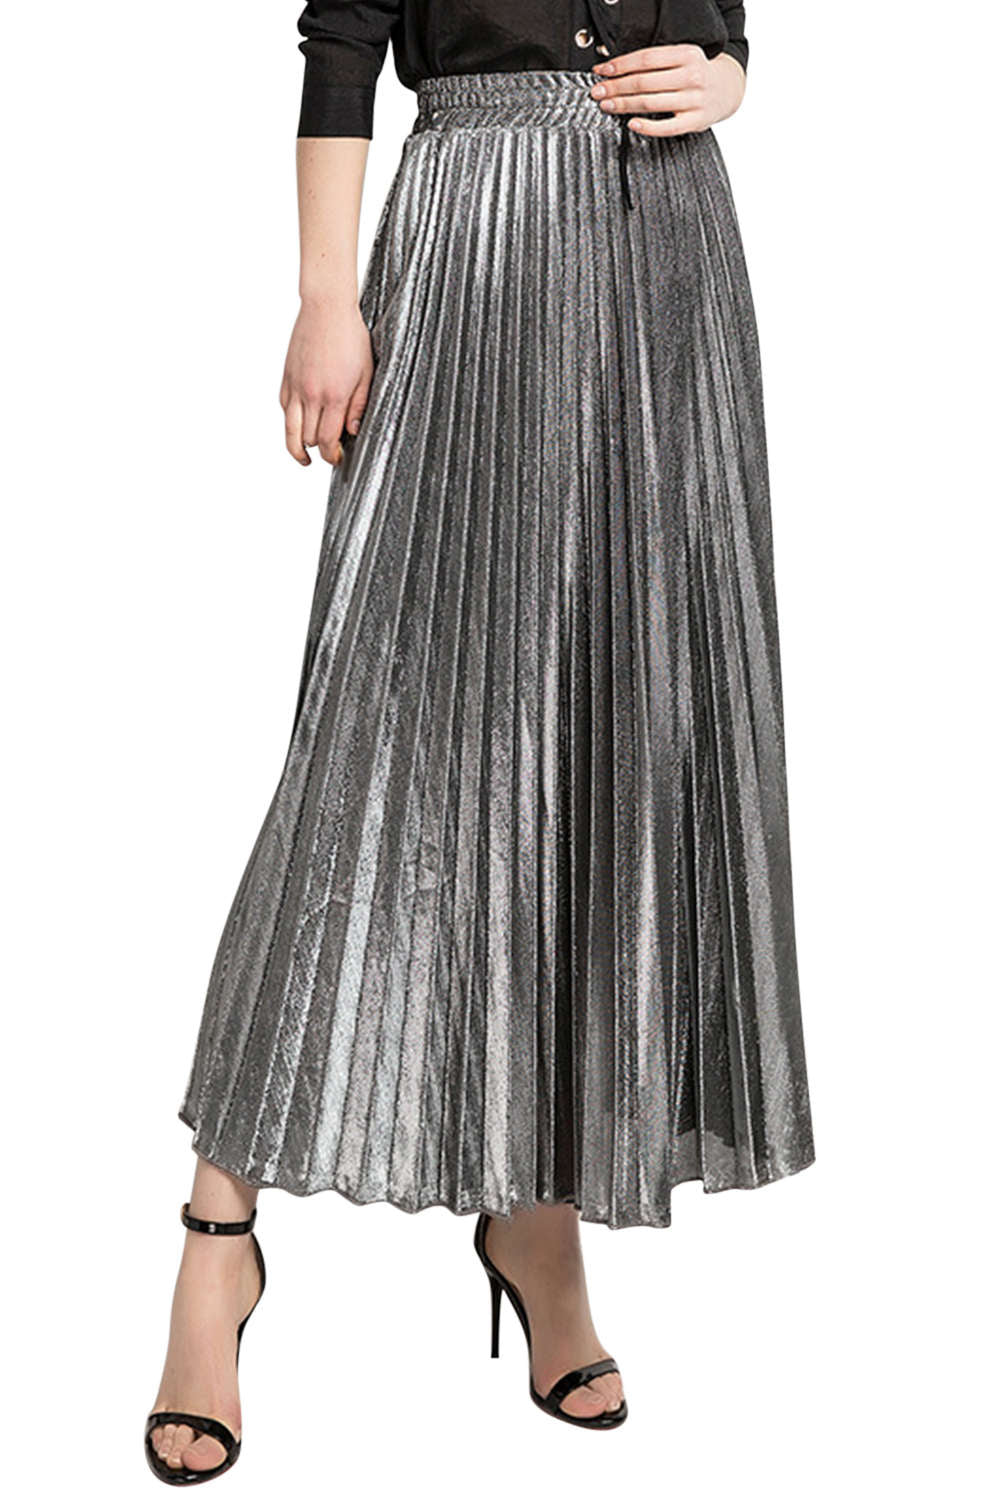 Iyasson sparkling High Waist Pleated skirt